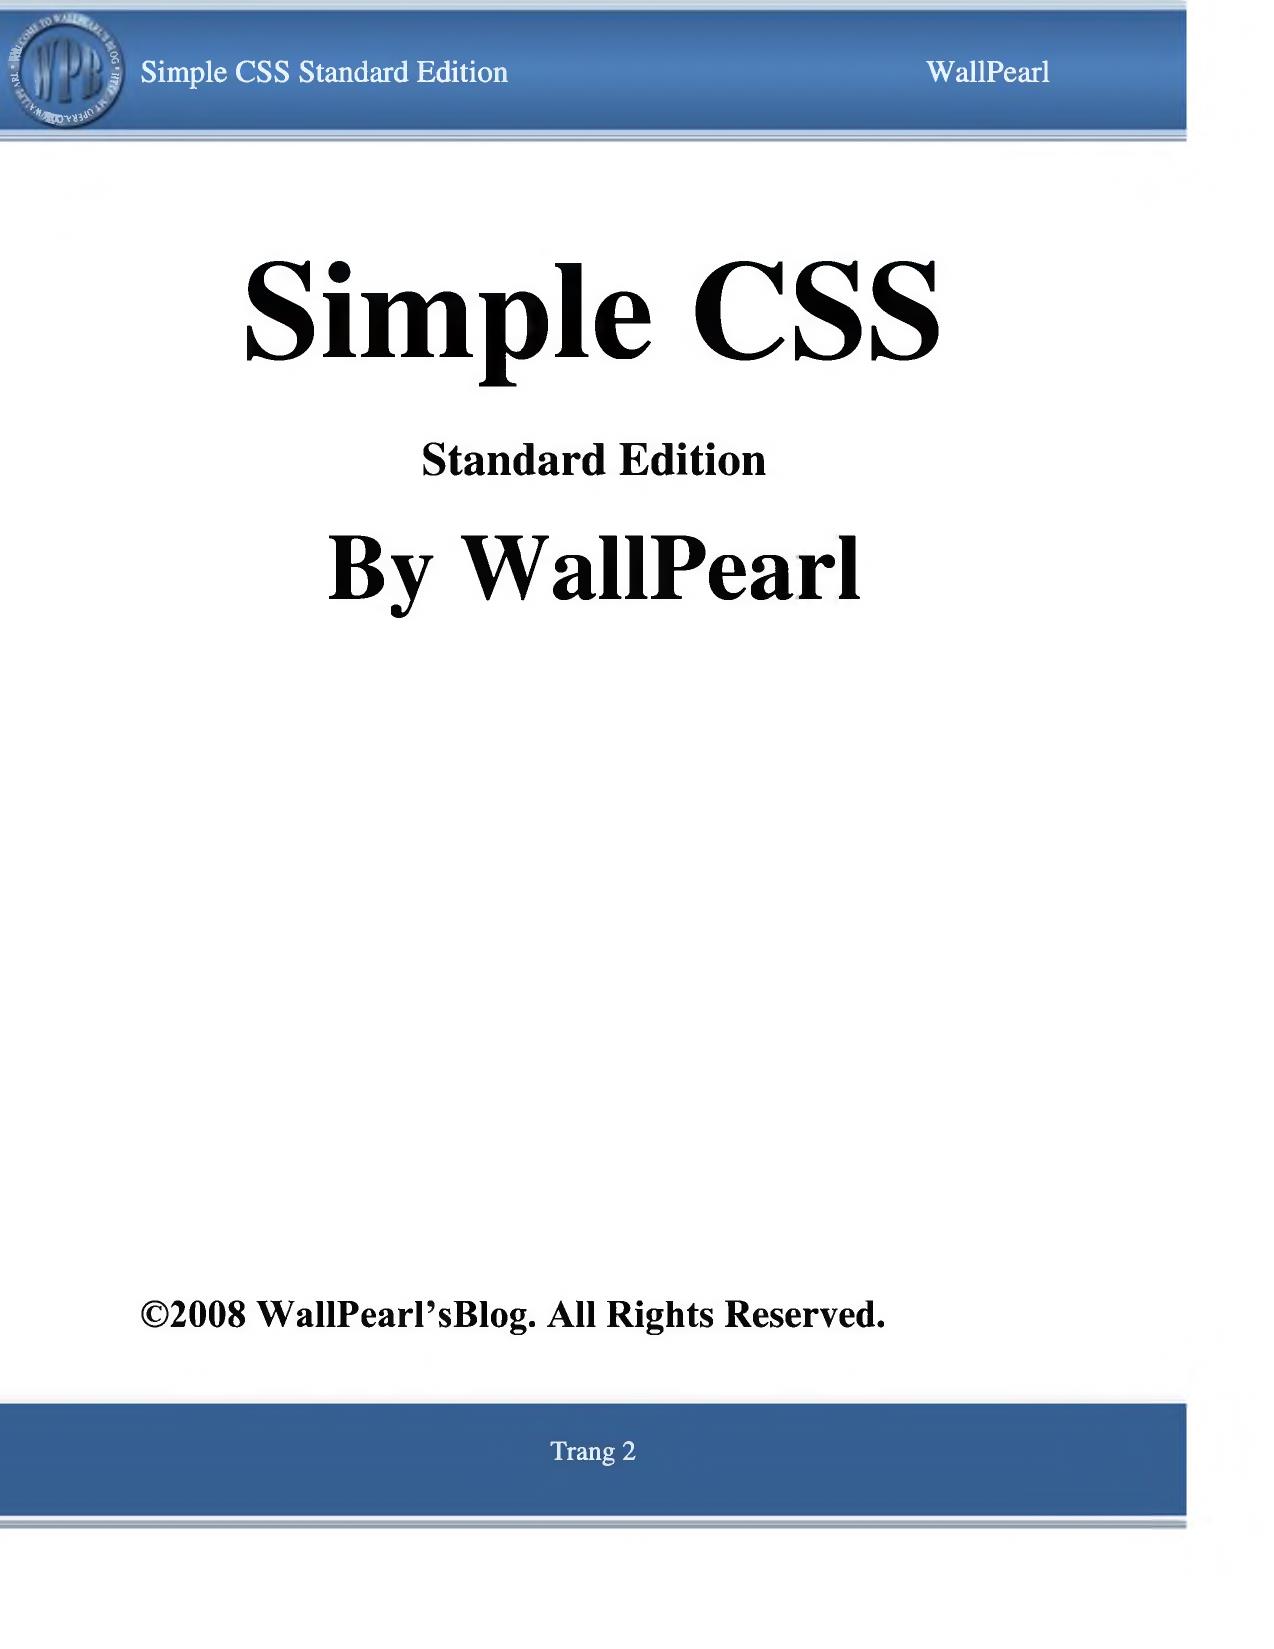 Simple CSS trang 2